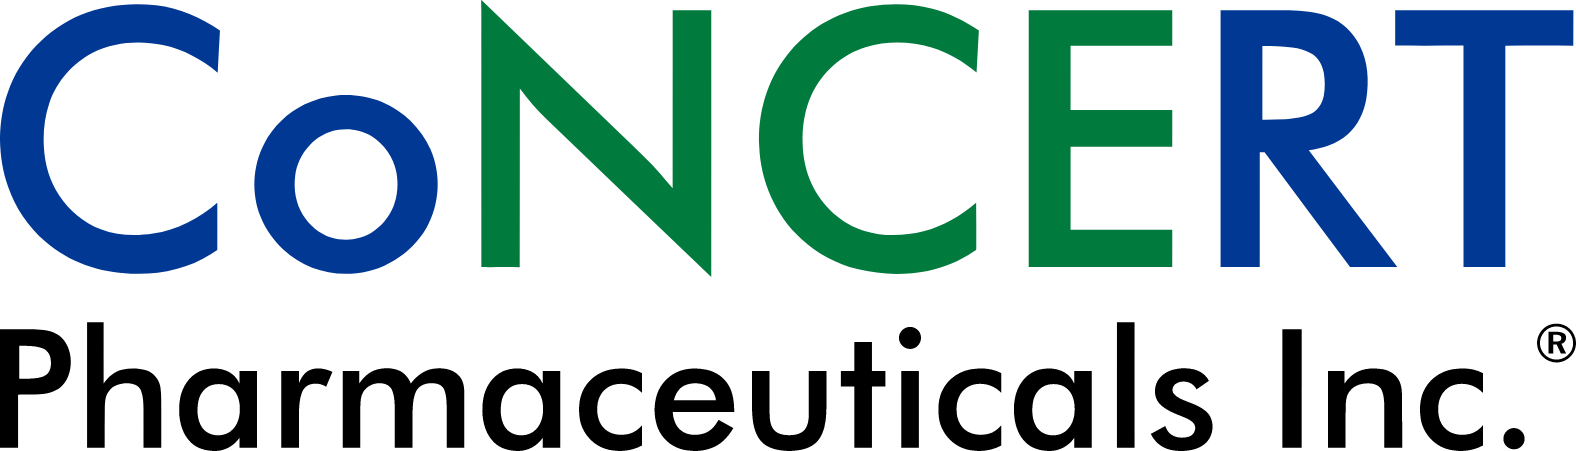 Concert Pharmaceuticals
 logo large (transparent PNG)